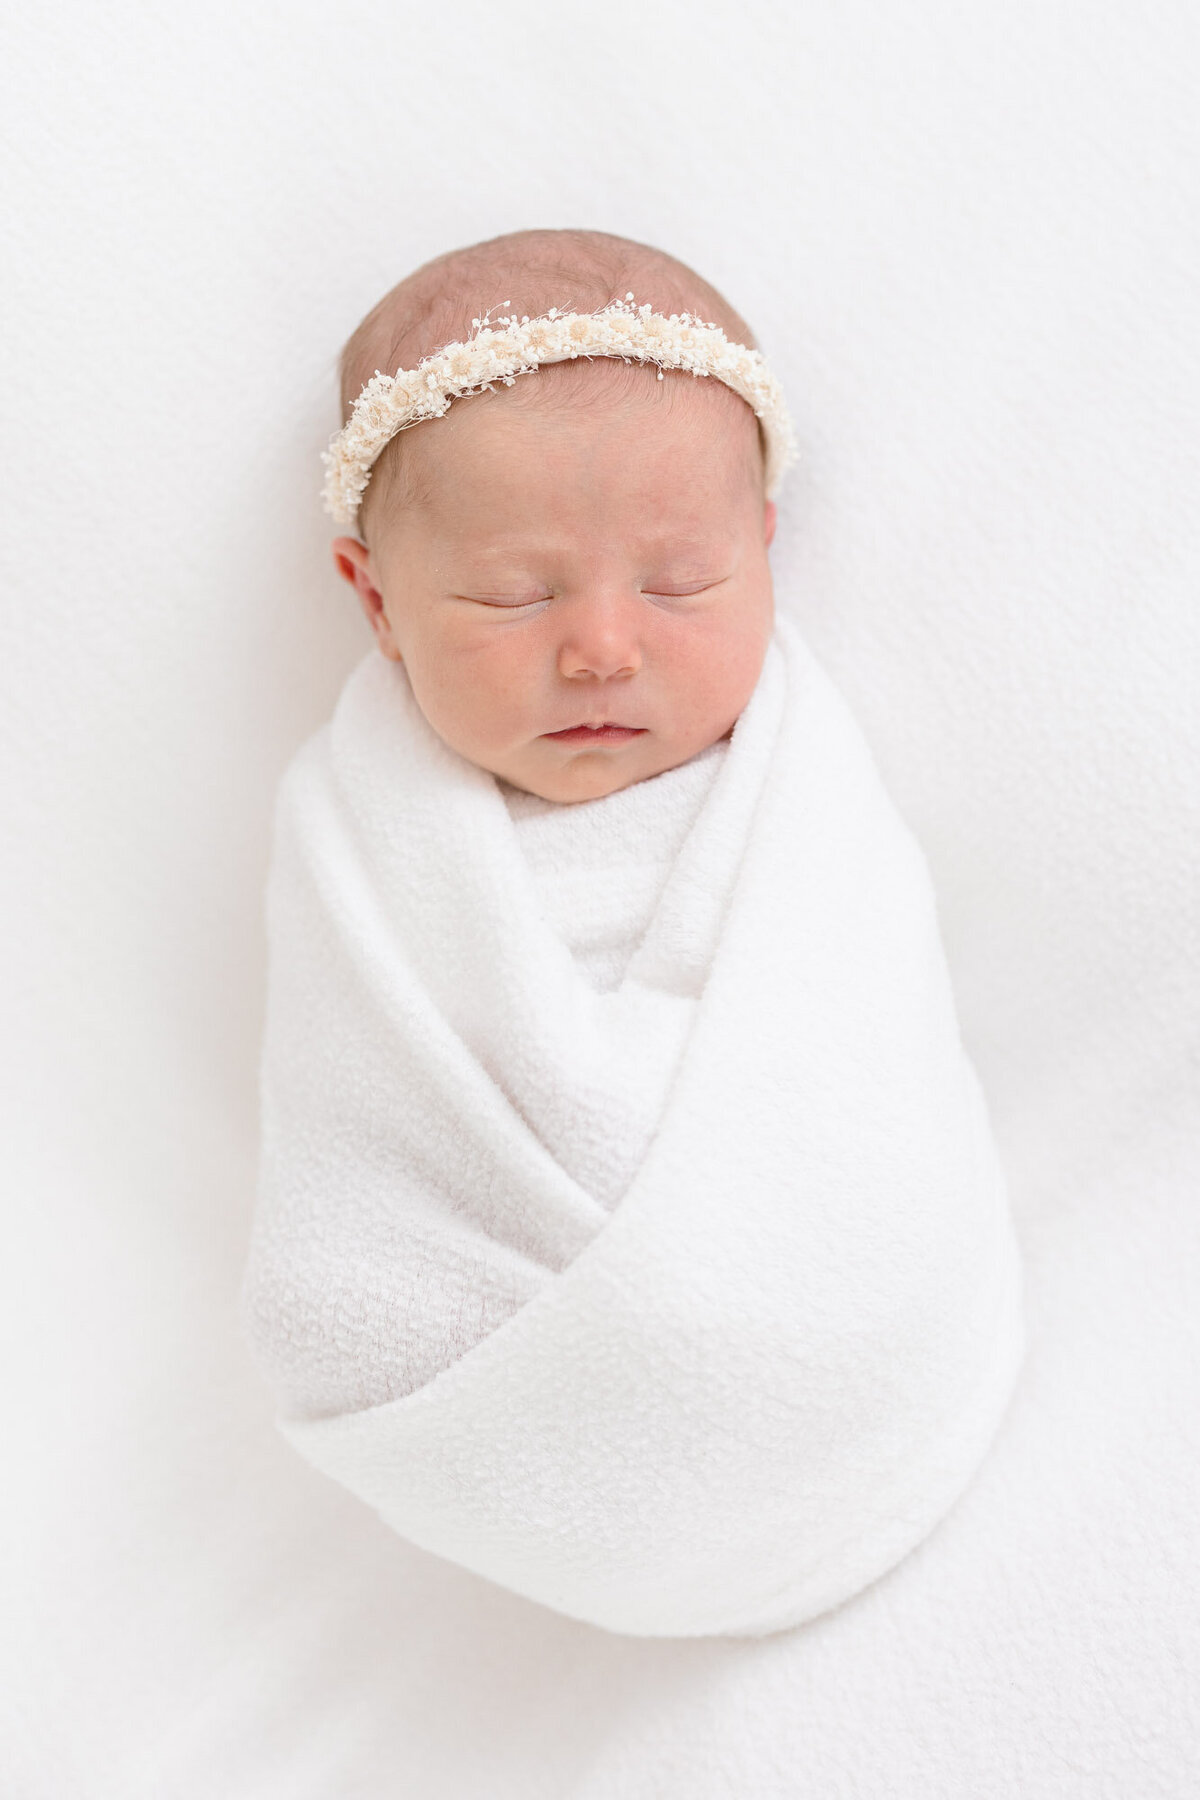 louisville-newborn-photographer-missy-marshall-13